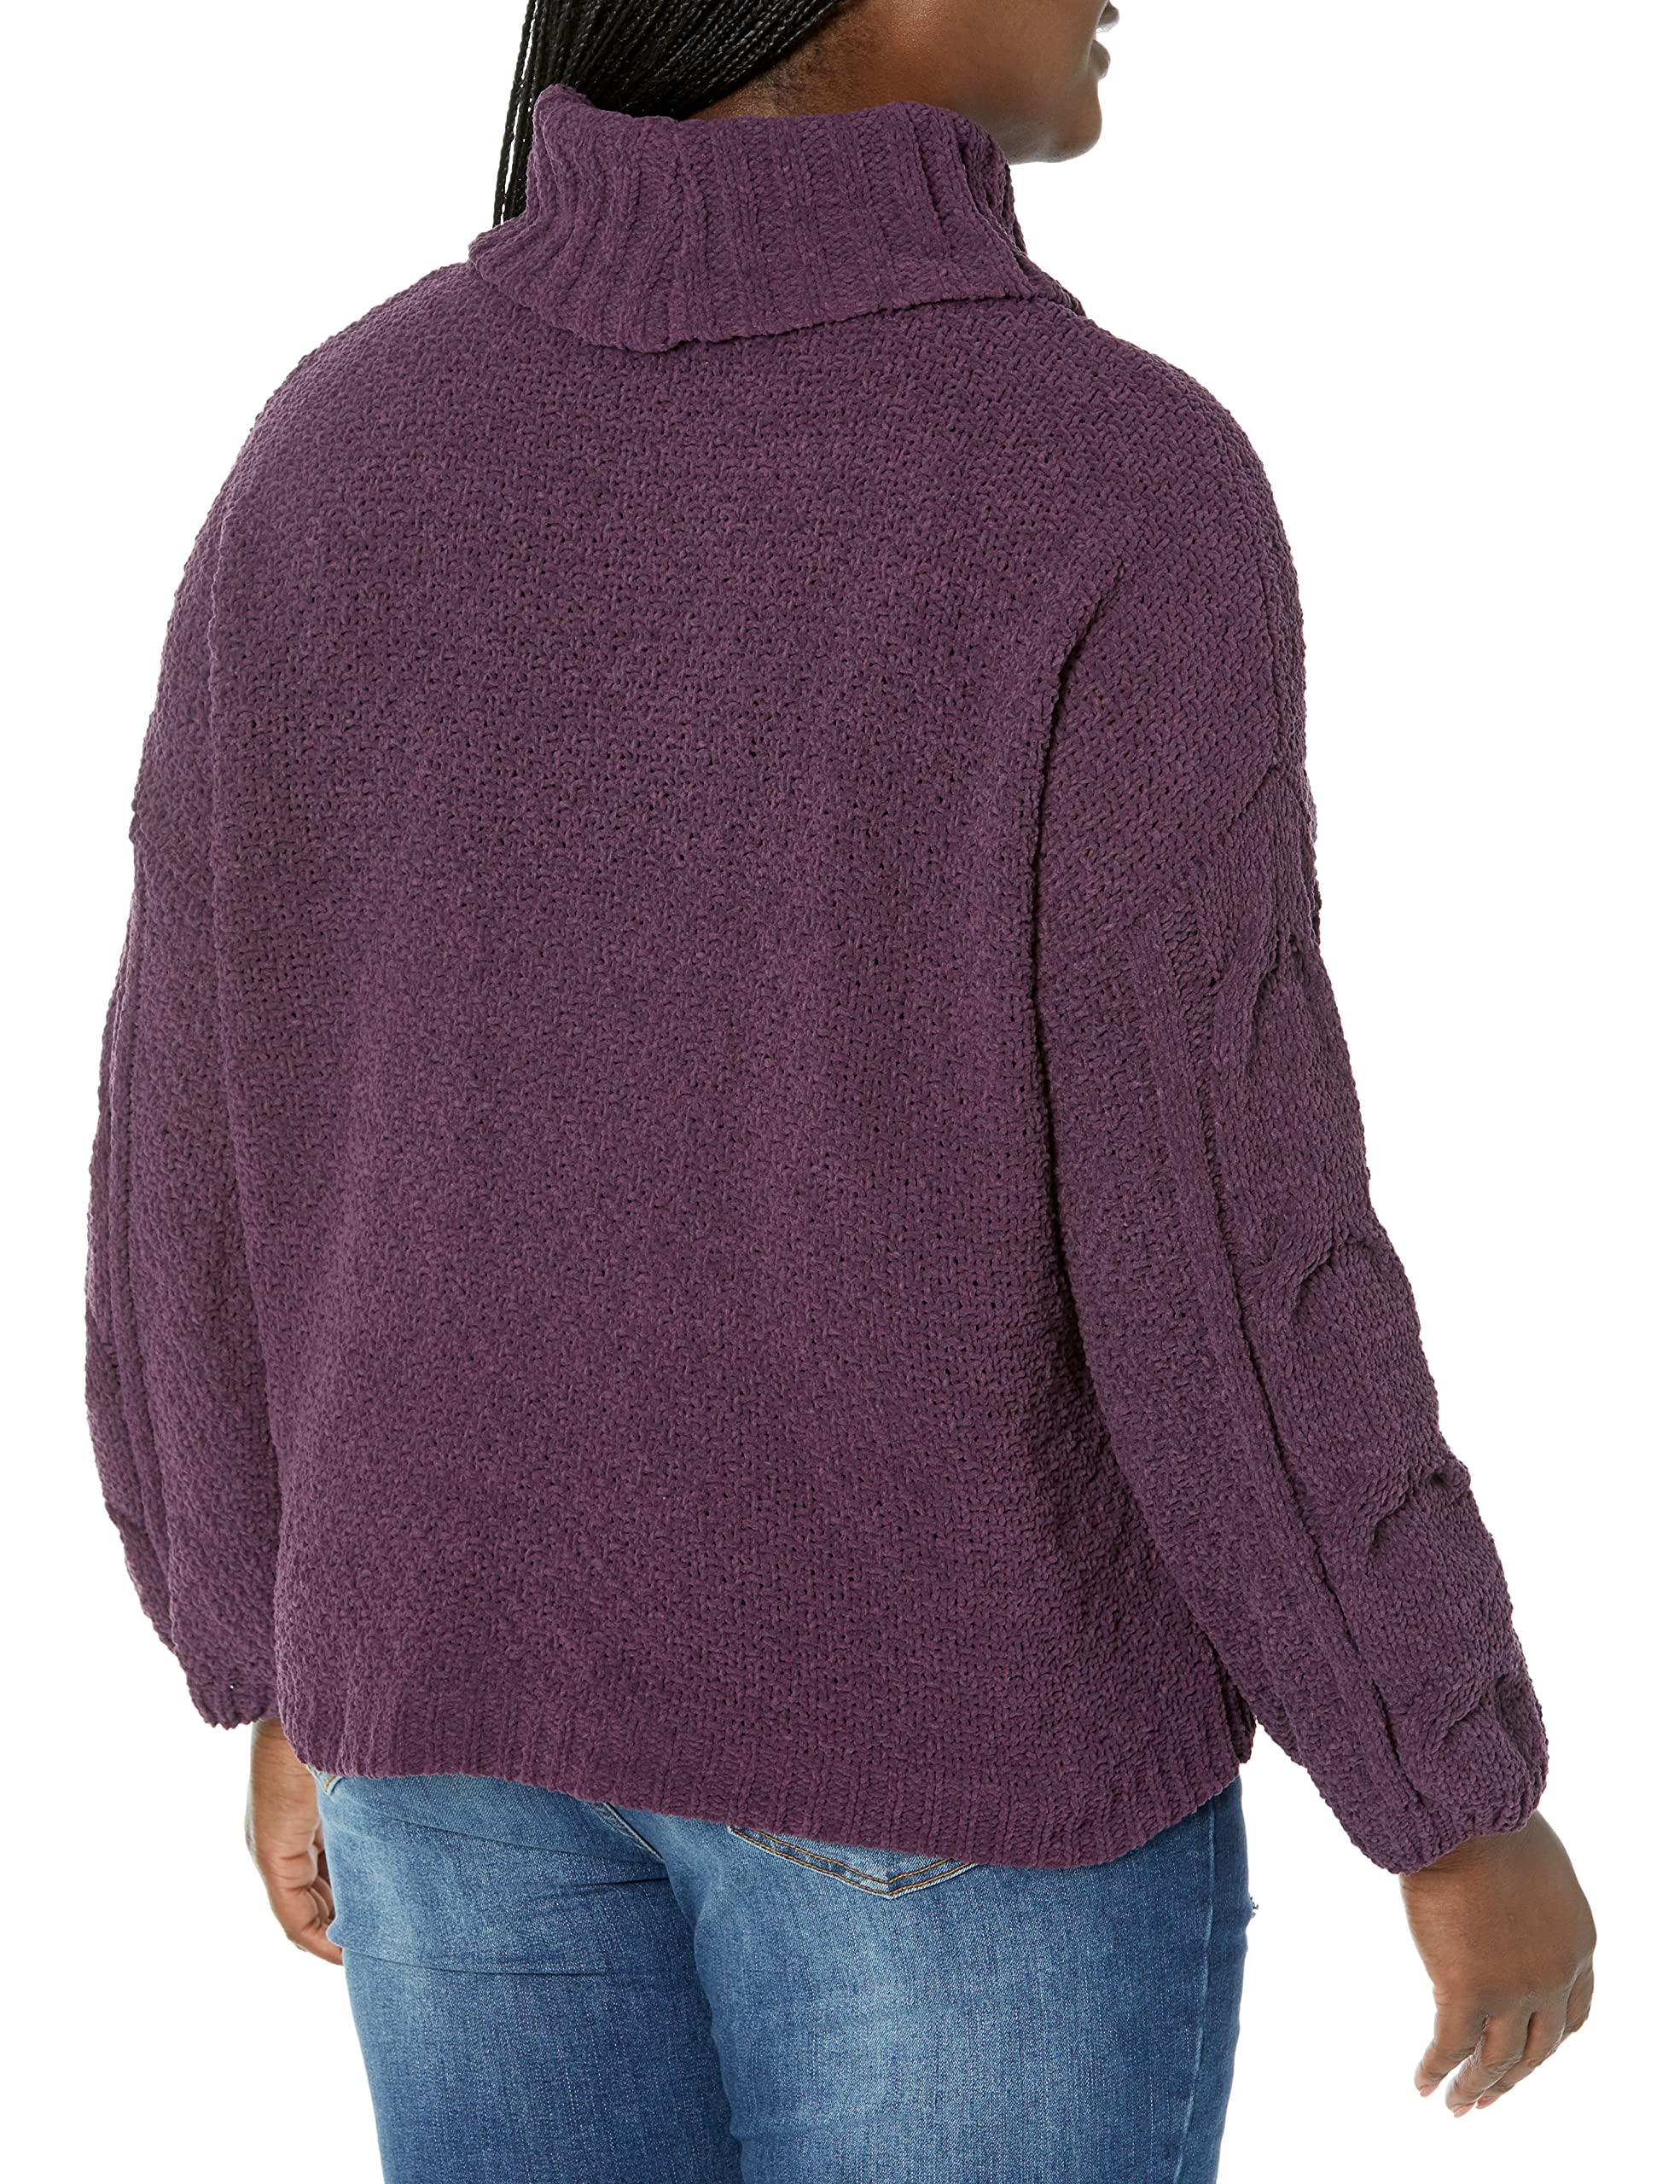 Seven7 Women's Cable Cowl Neck Sweater - Grovano